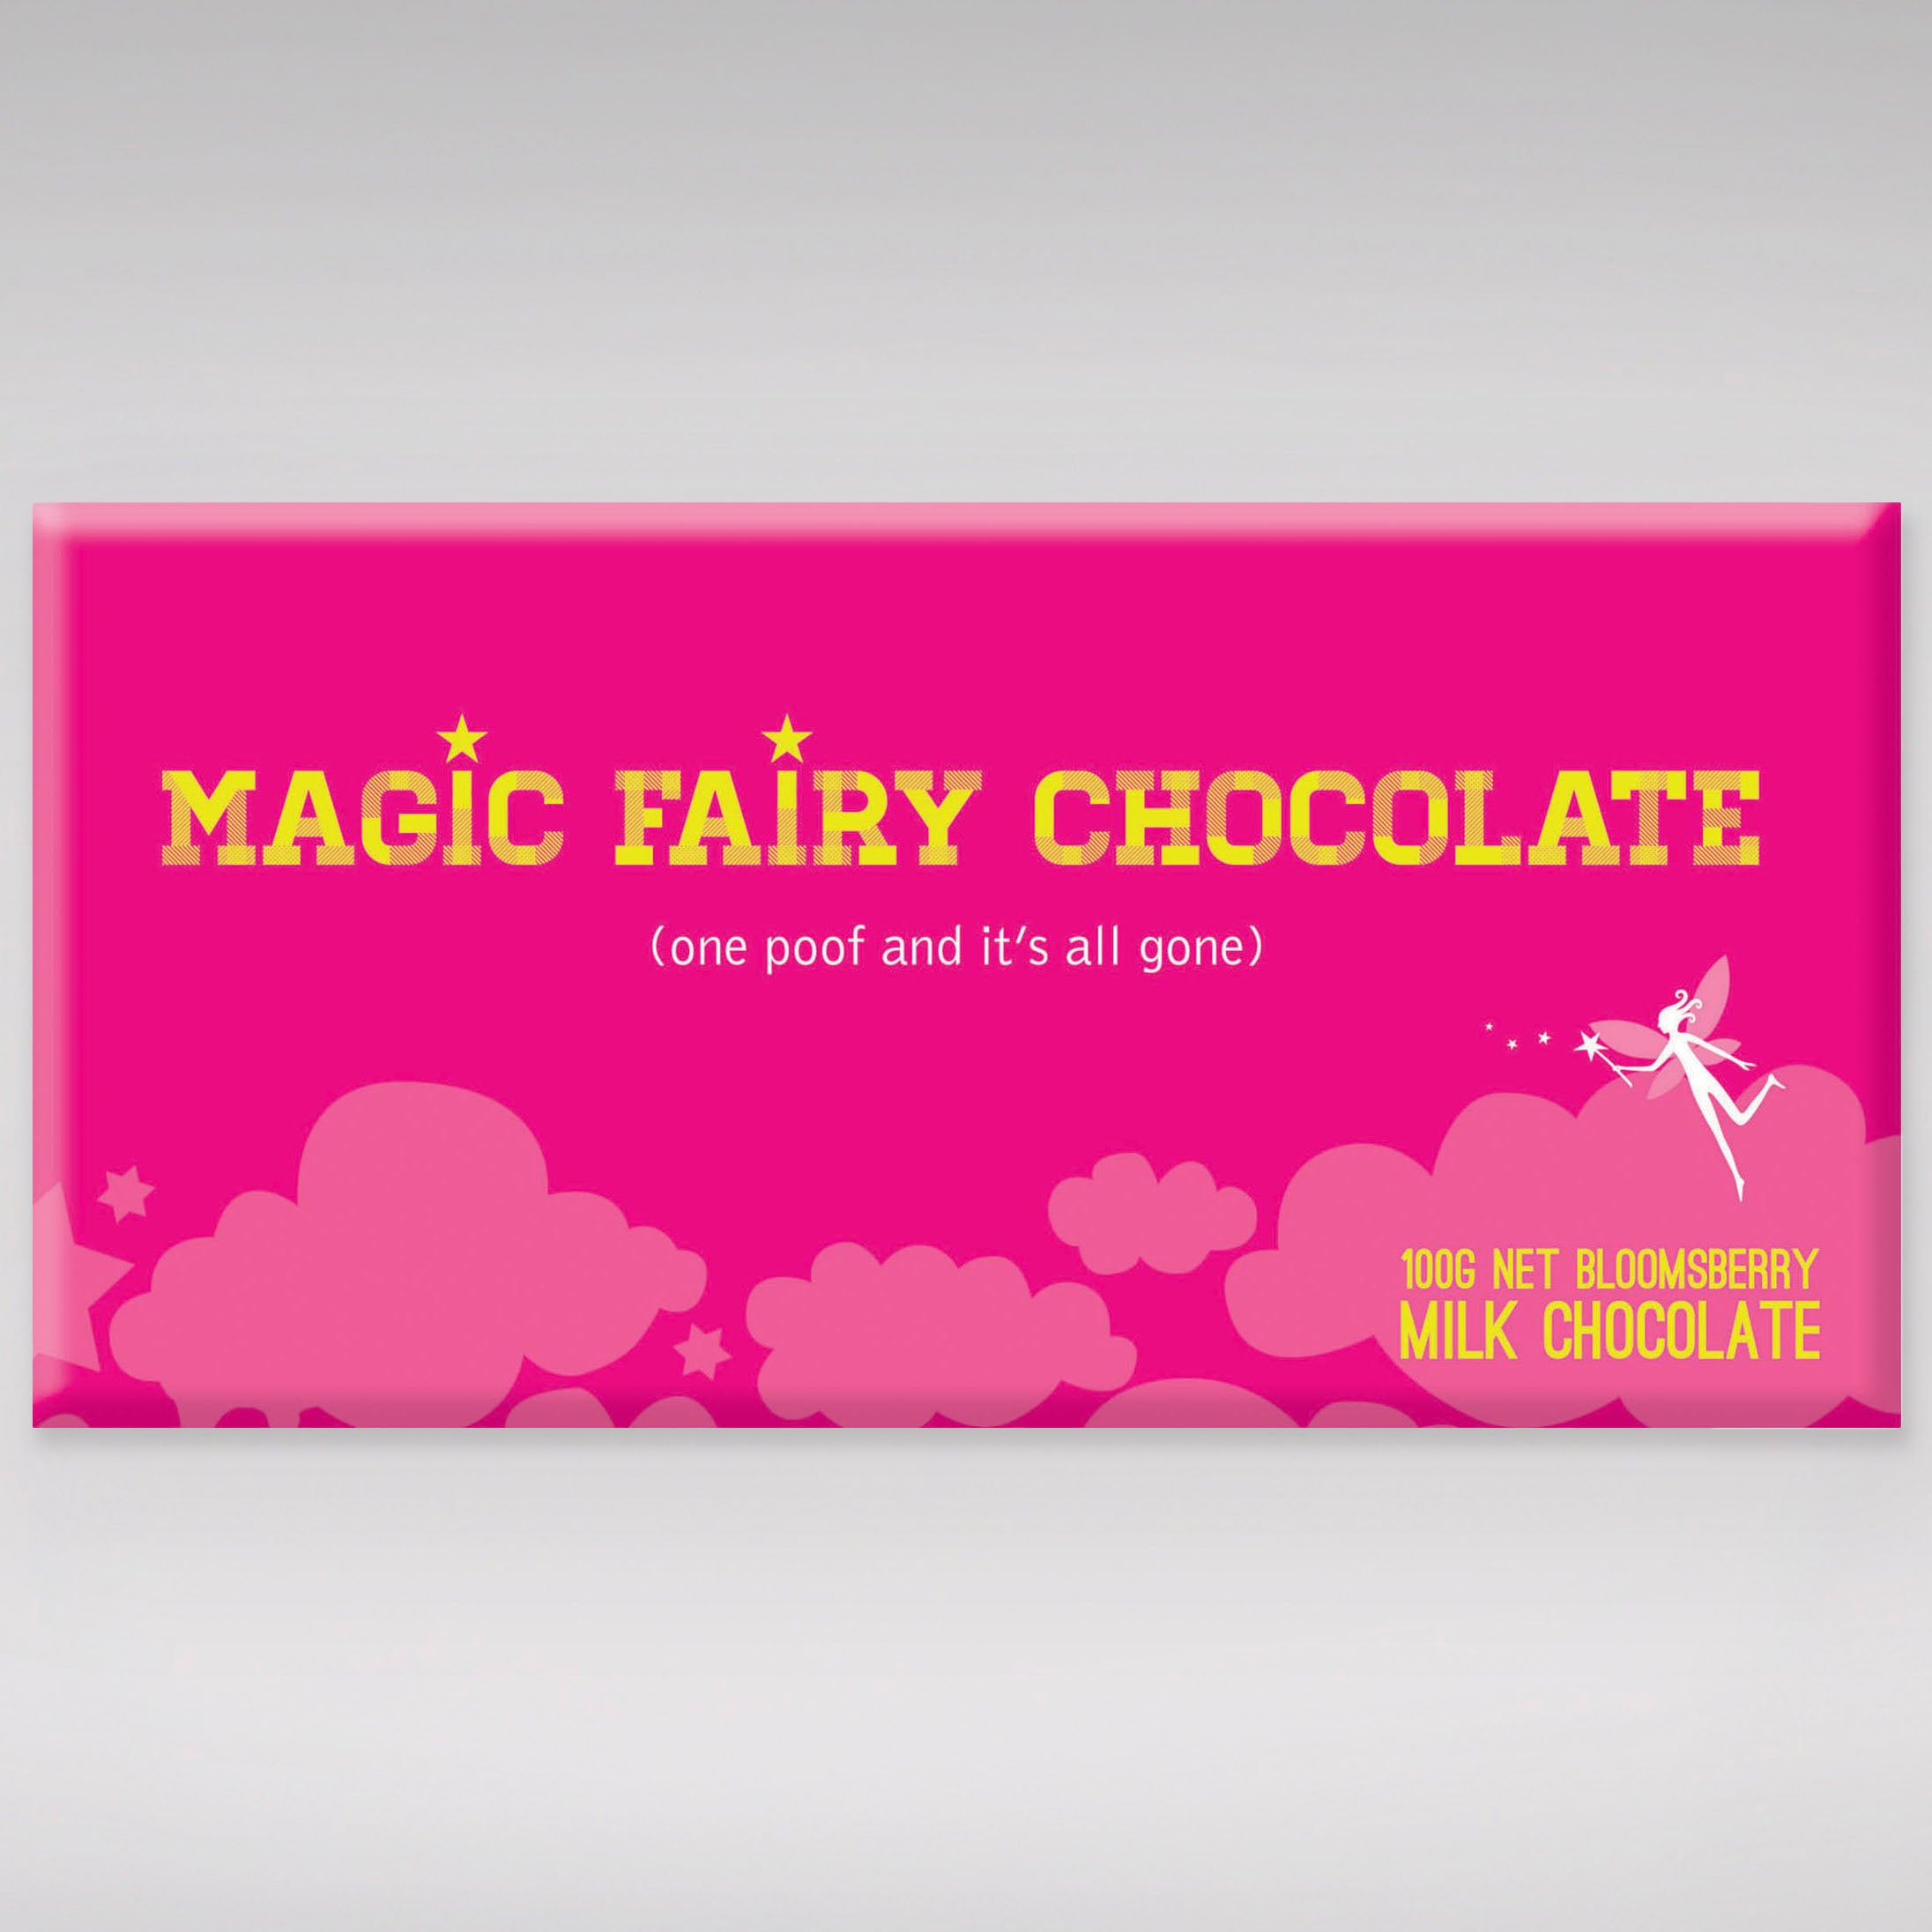 Bloomsberry & Co 'Magic Fairy' Milk Chocolate Bar